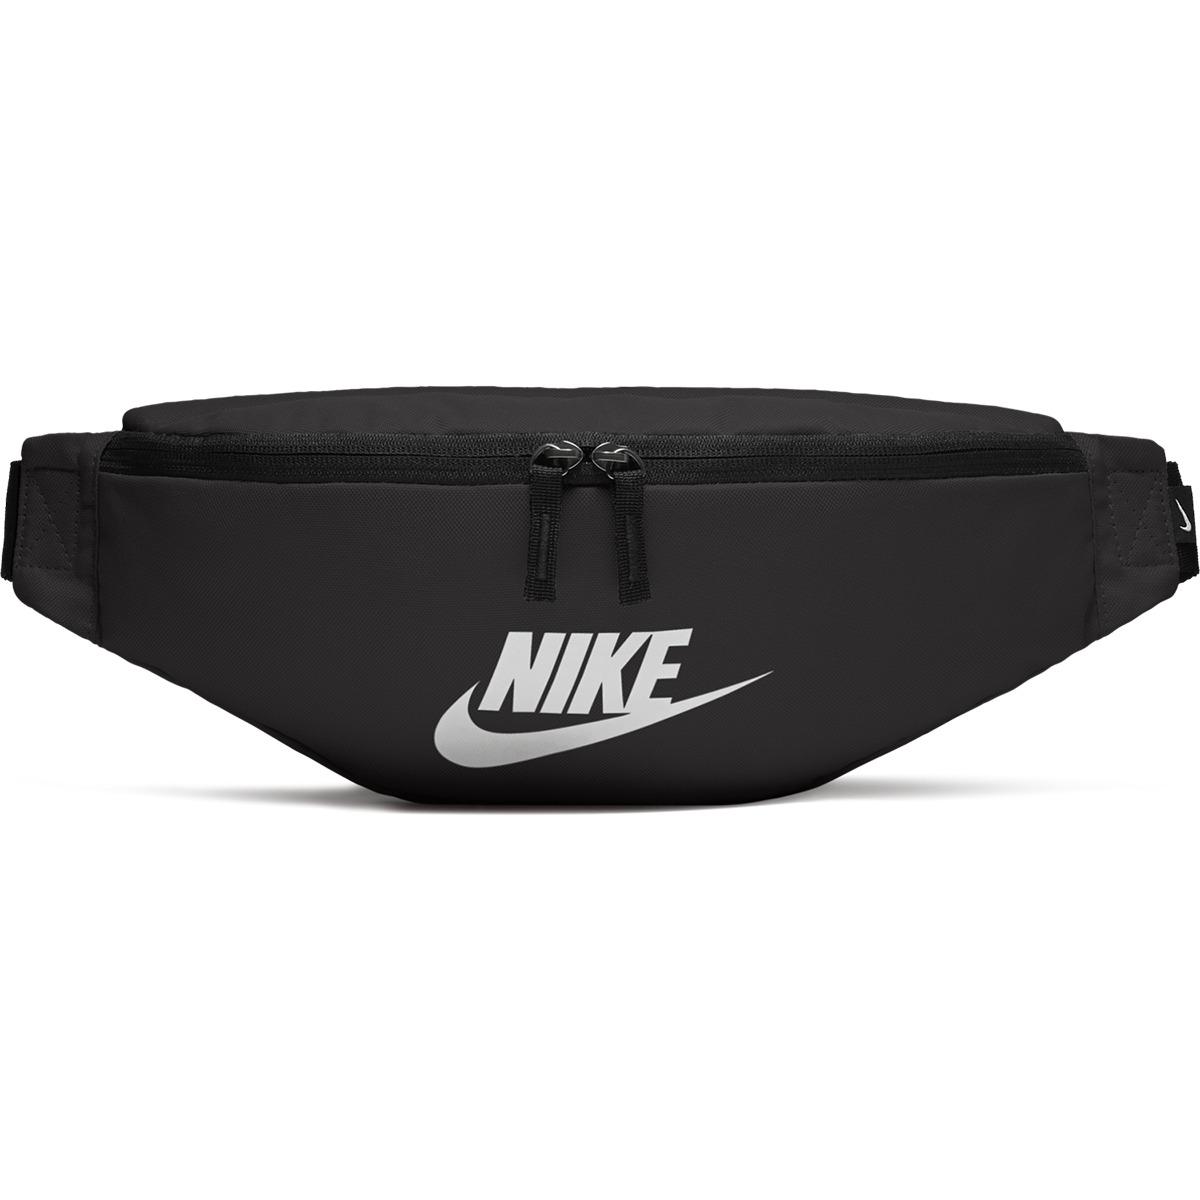 Nike Synthetic Sportswear Heritage Bum Bag in Black for Men - Lyst